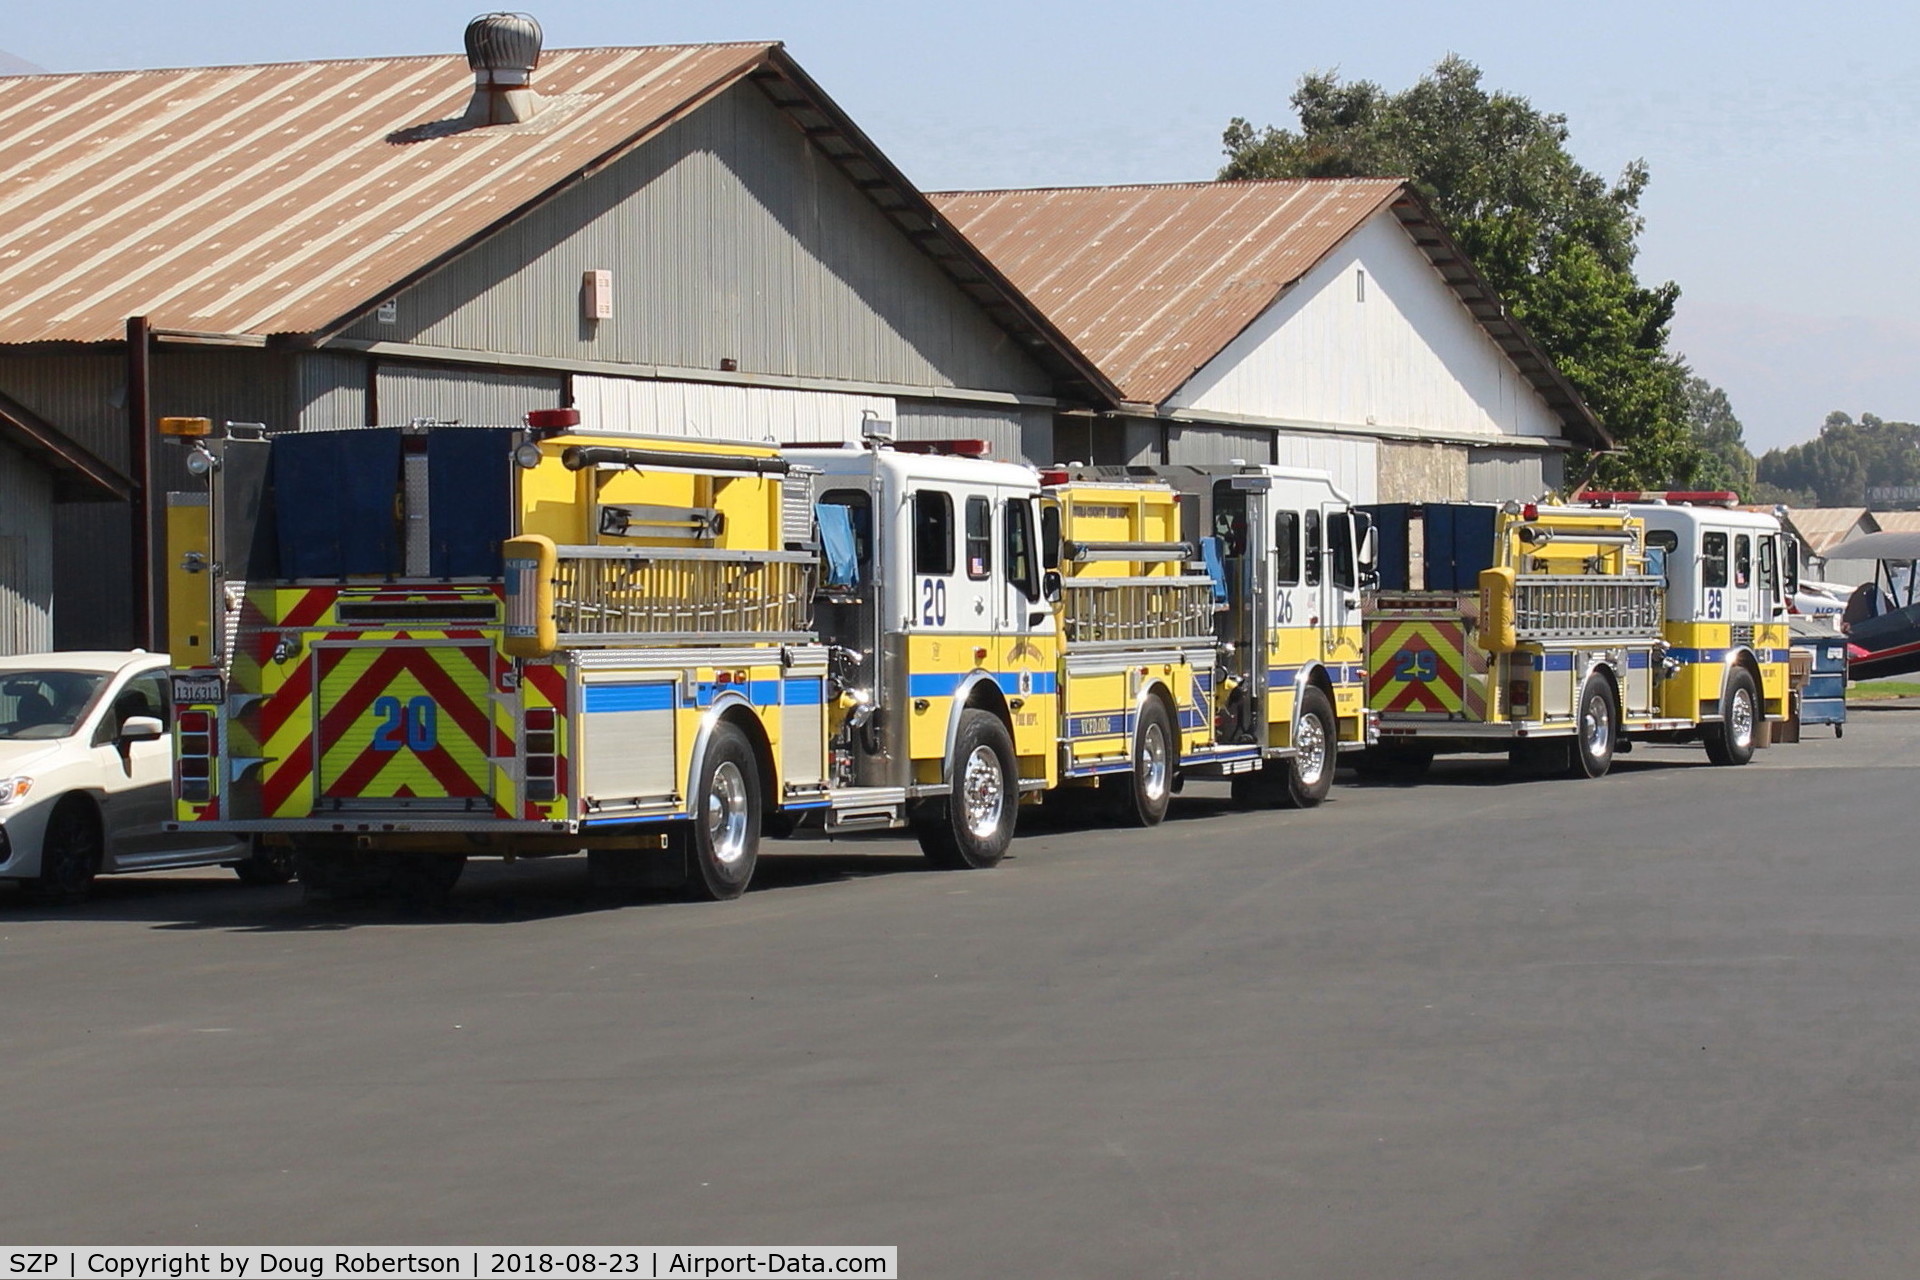 Santa Paula Airport (SZP) - Santa Paula Fire Department Fire Trucks-In-Service training going on at the airport